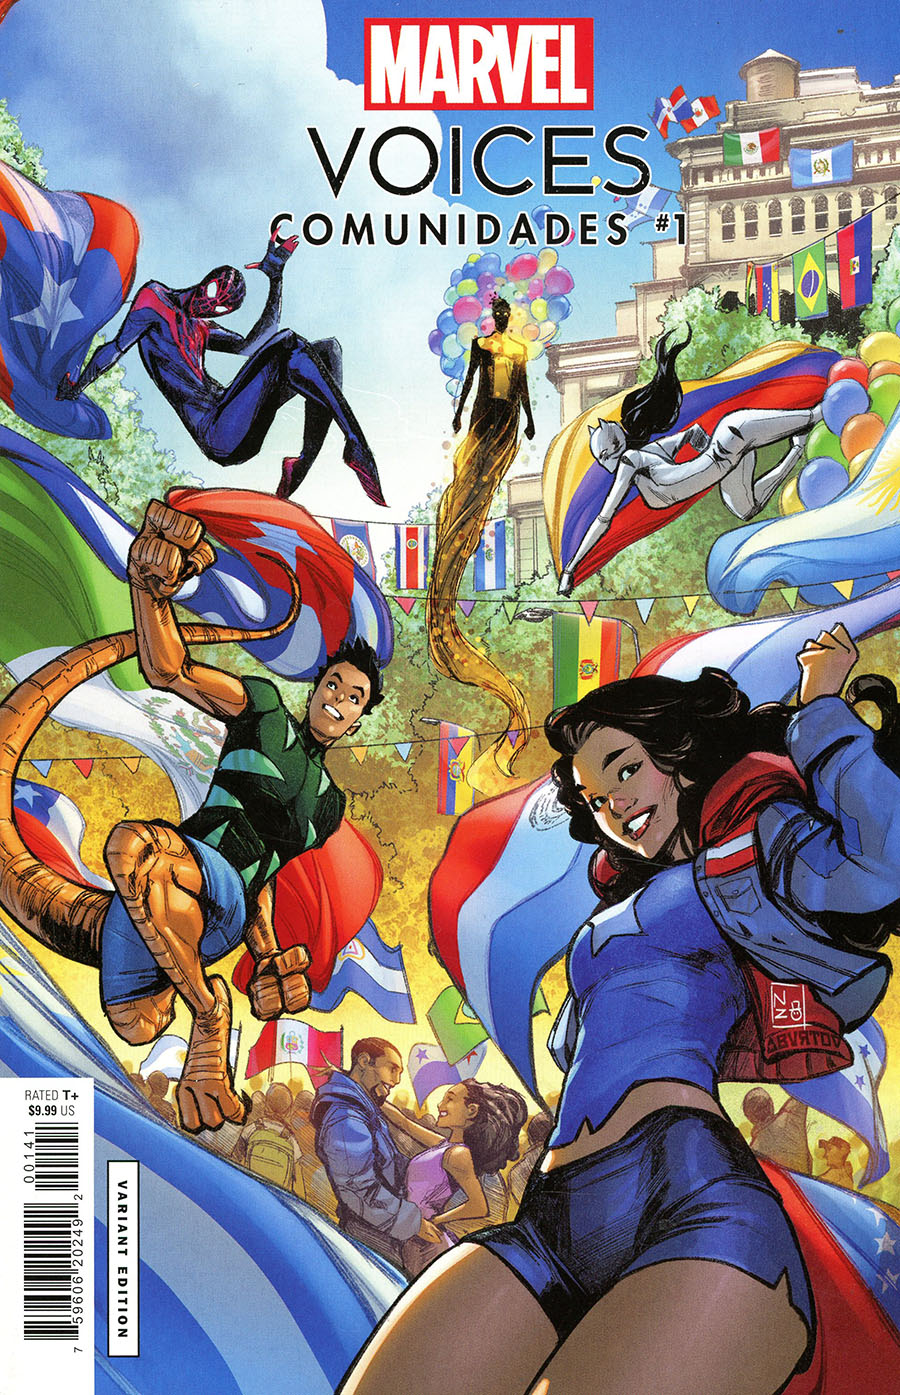 Marvels Voices Community (Comunidades) #1 (One Shot) Cover C Variant Nabetse Zitro Cover